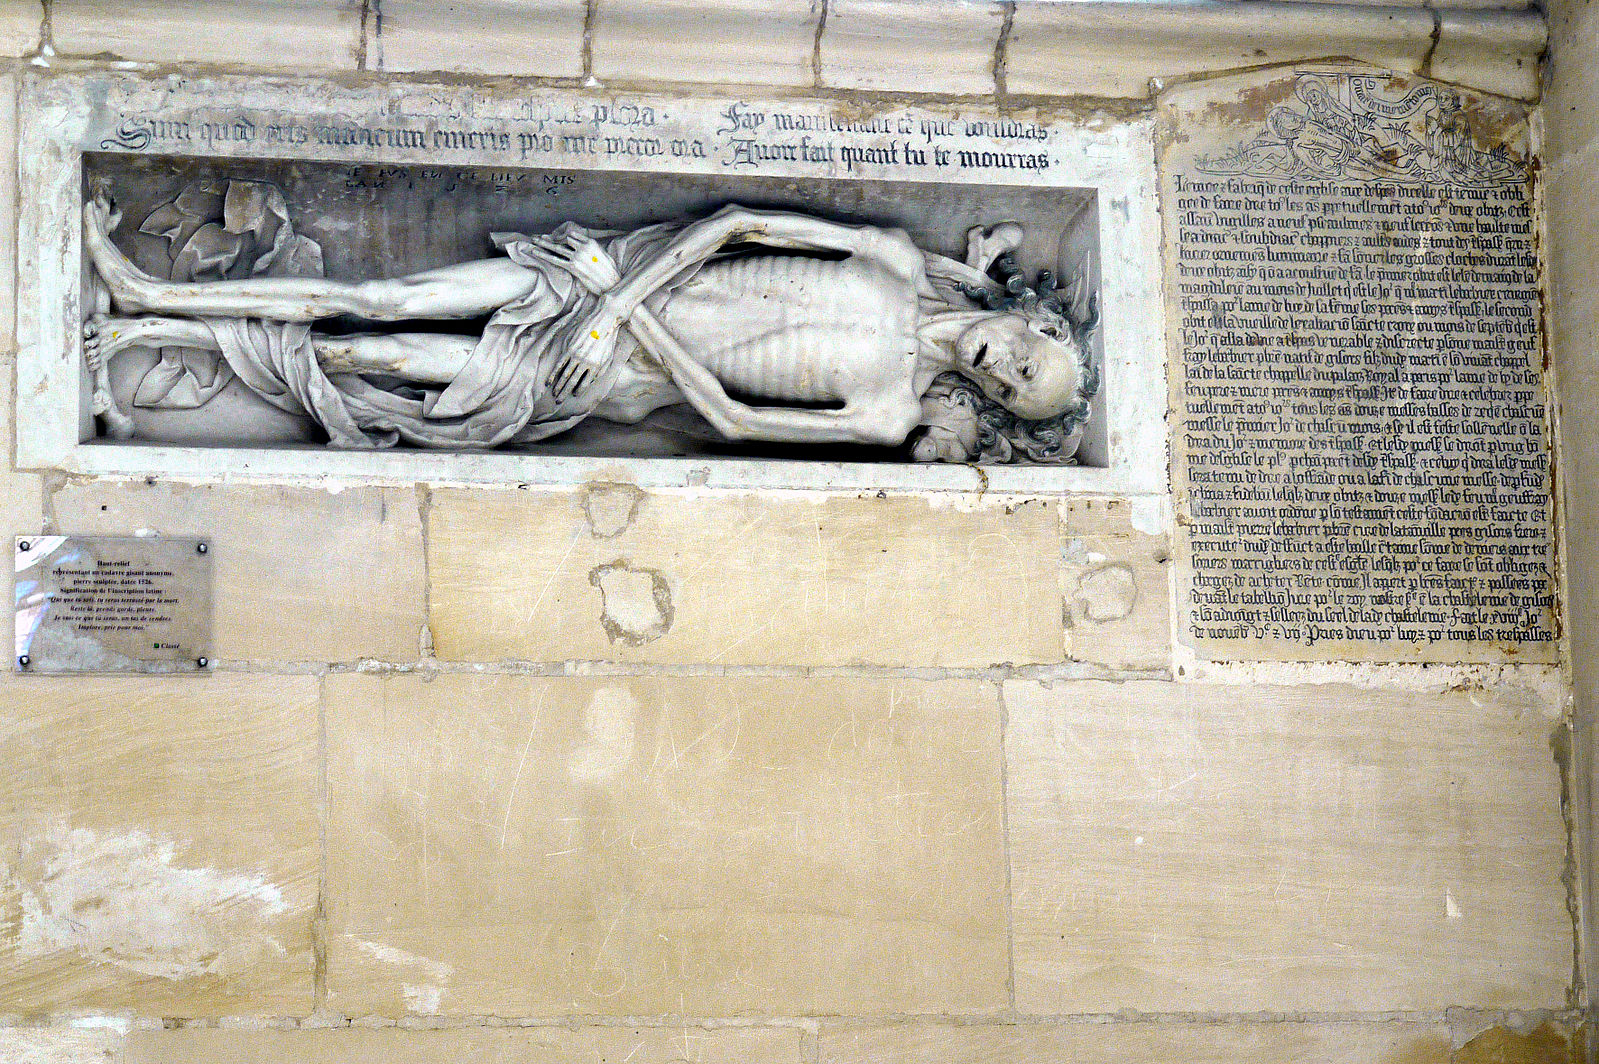 Cadaver Tomb